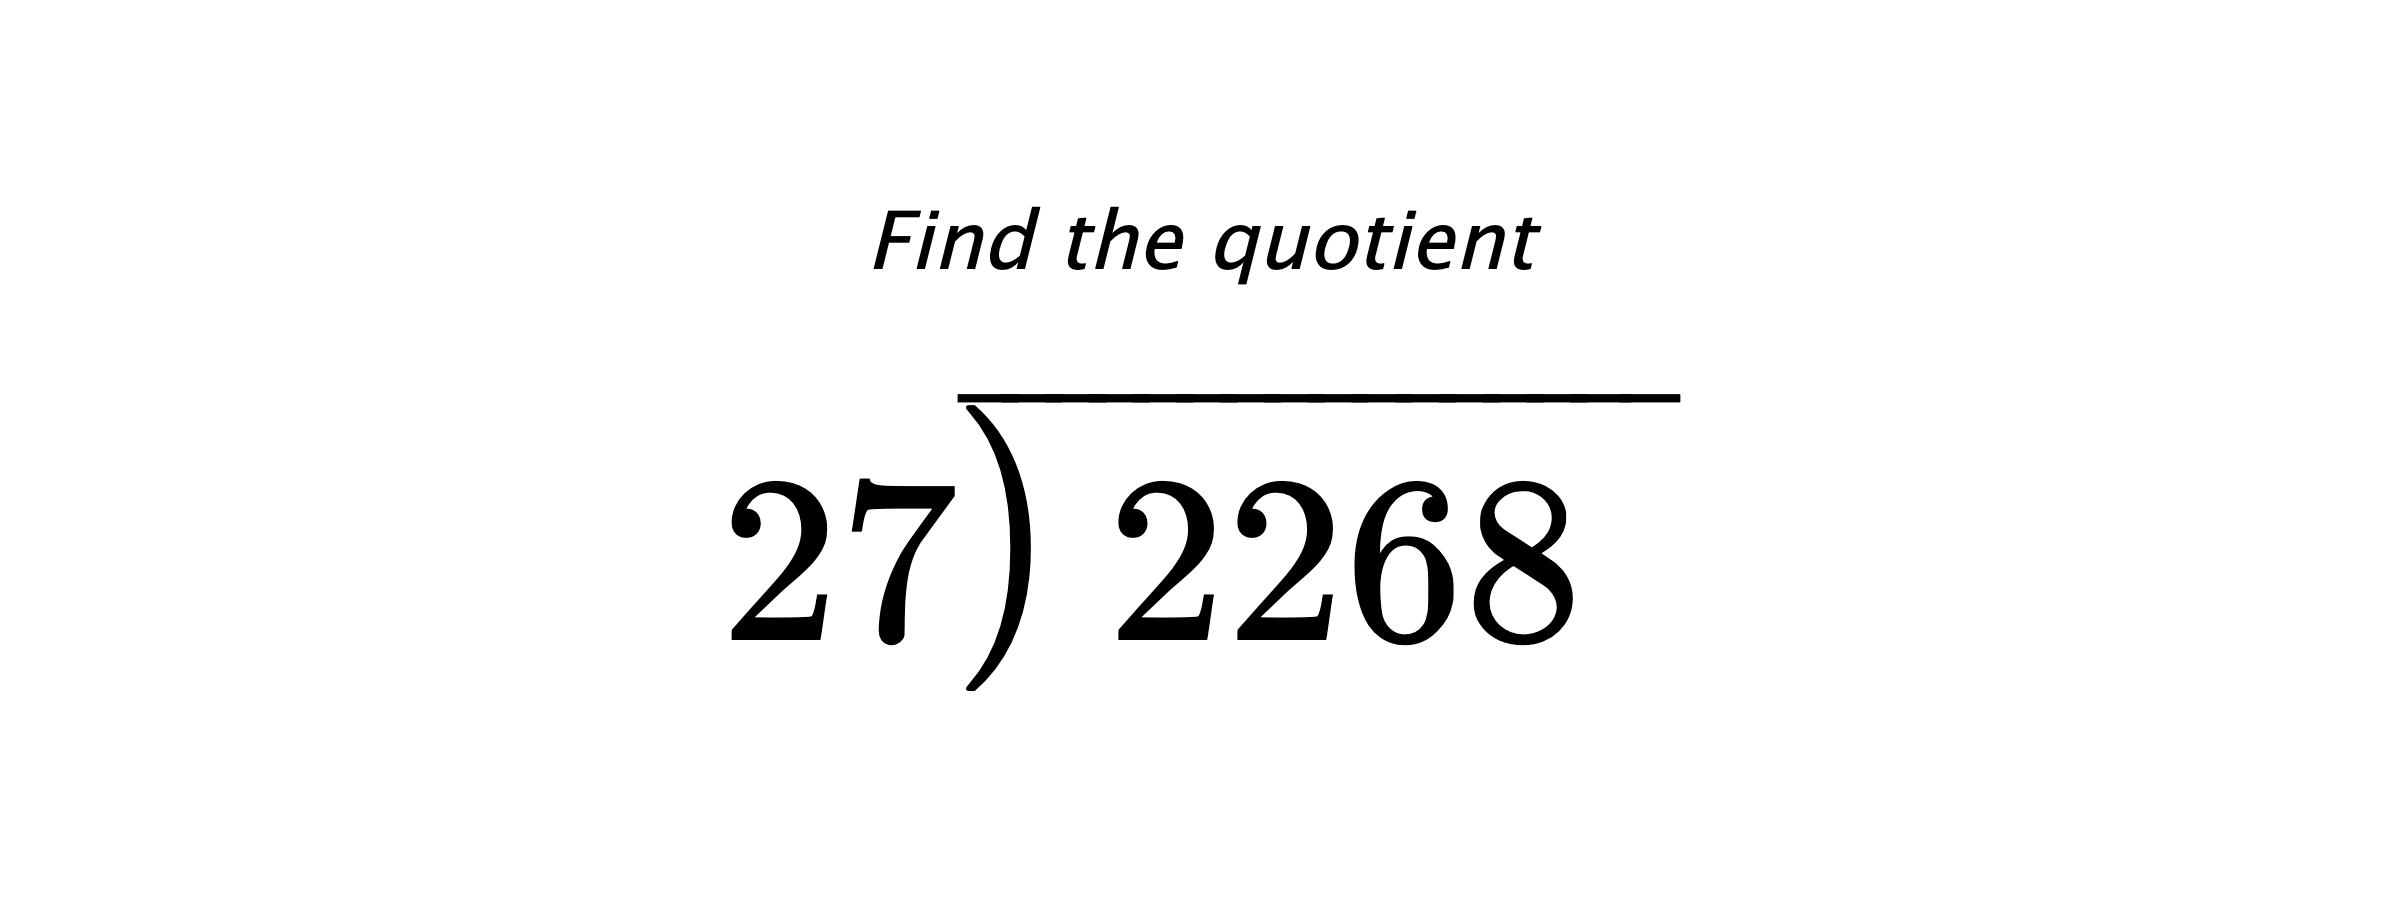 Find the quotient $ 27{\overline{\smash{\raise.3ex\hbox{$\big)$}}\,2268\phantom{)}}} $